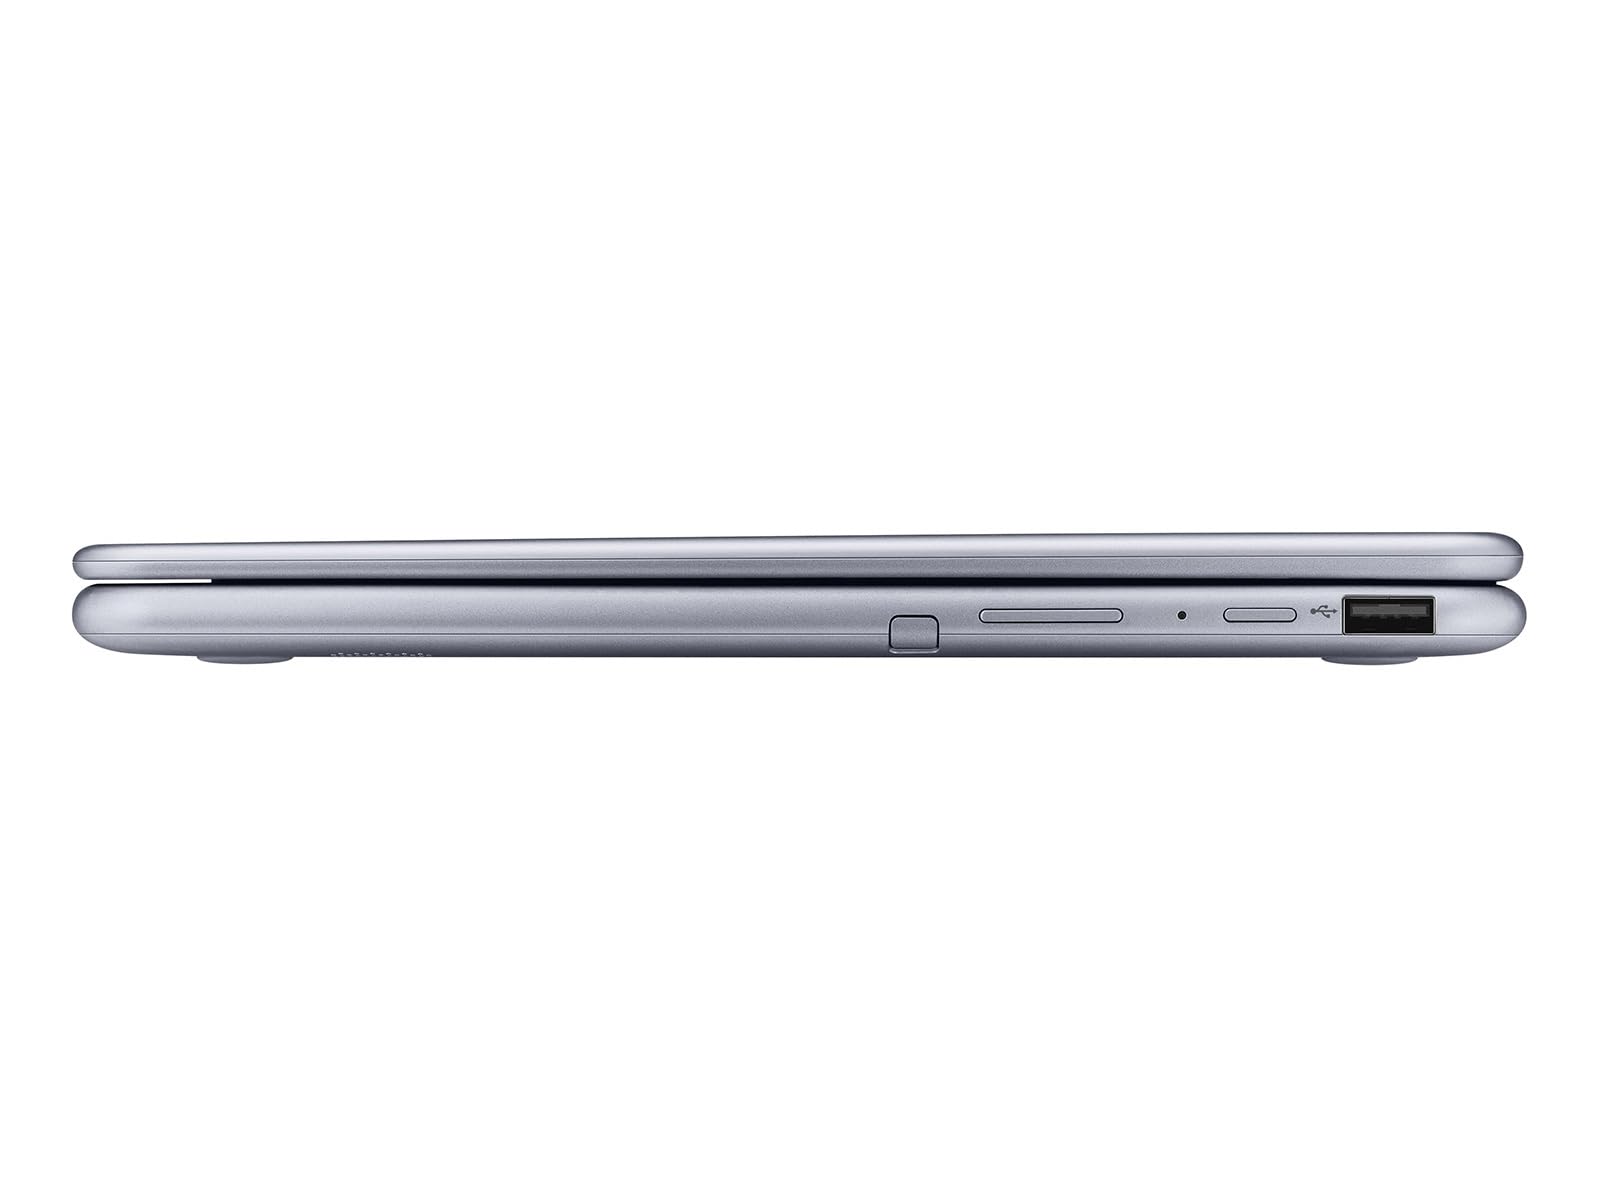 Samsung Chromebook Plus V2 360 12.2" FHD+ 2-in-1 Touchscreen (Intel Celeron 3965Y, 4GB RAM, 64GB eMMC, Active Stylus) Home & Education Laptop, 10-Hour Long Battery Life, 13MP Dual Webcam, Chrome OS